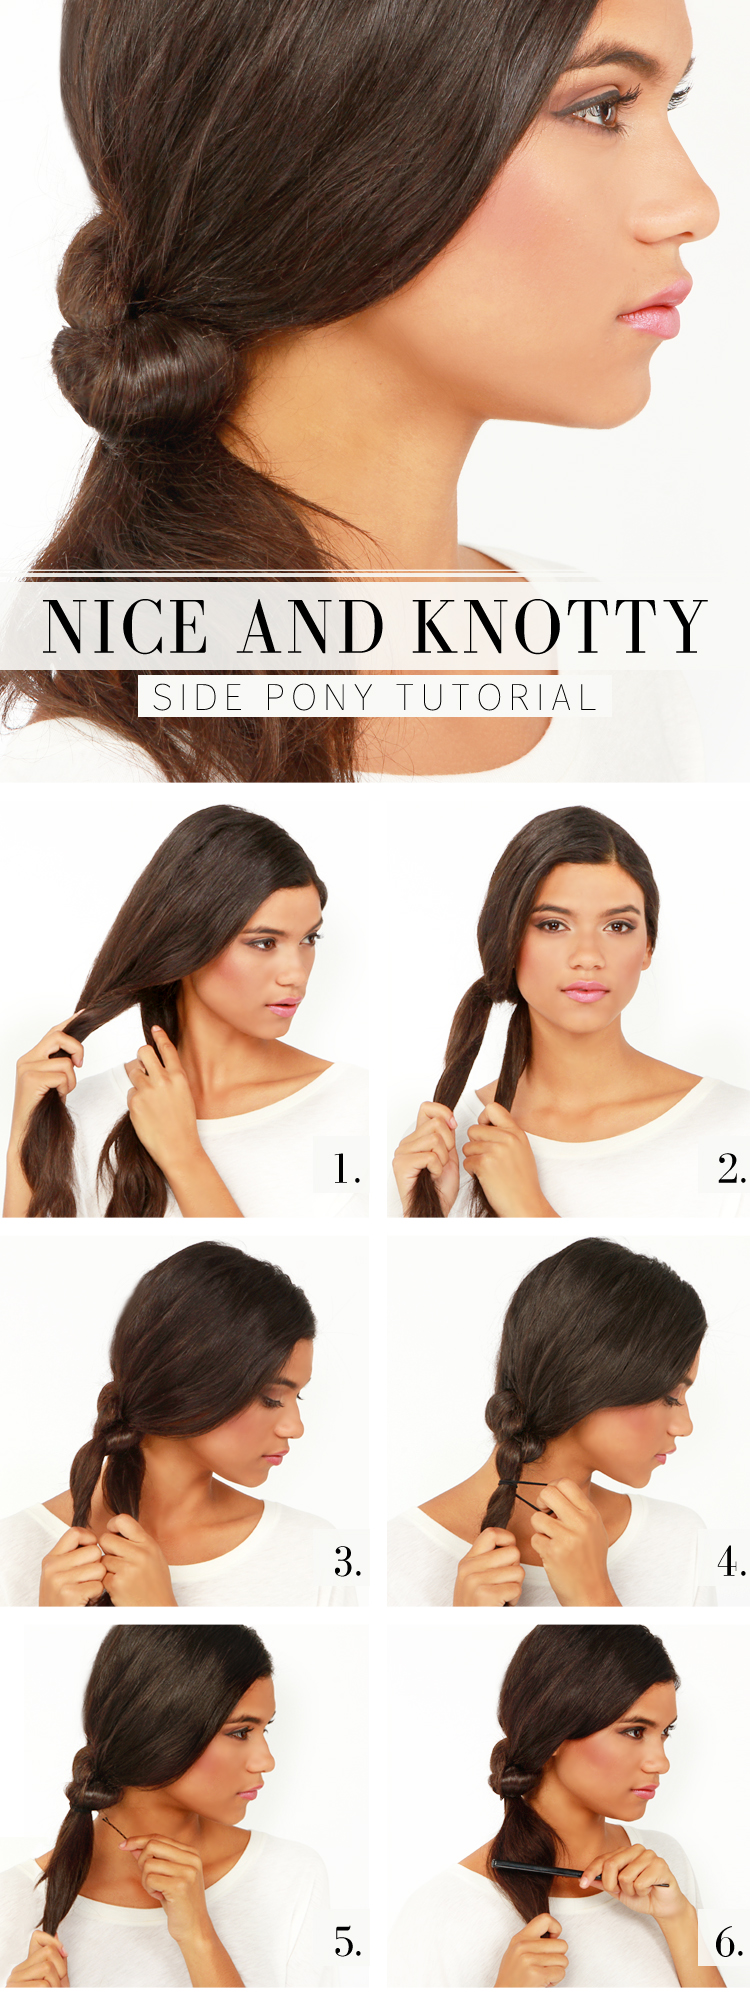 Knotty side ponytail tutorial